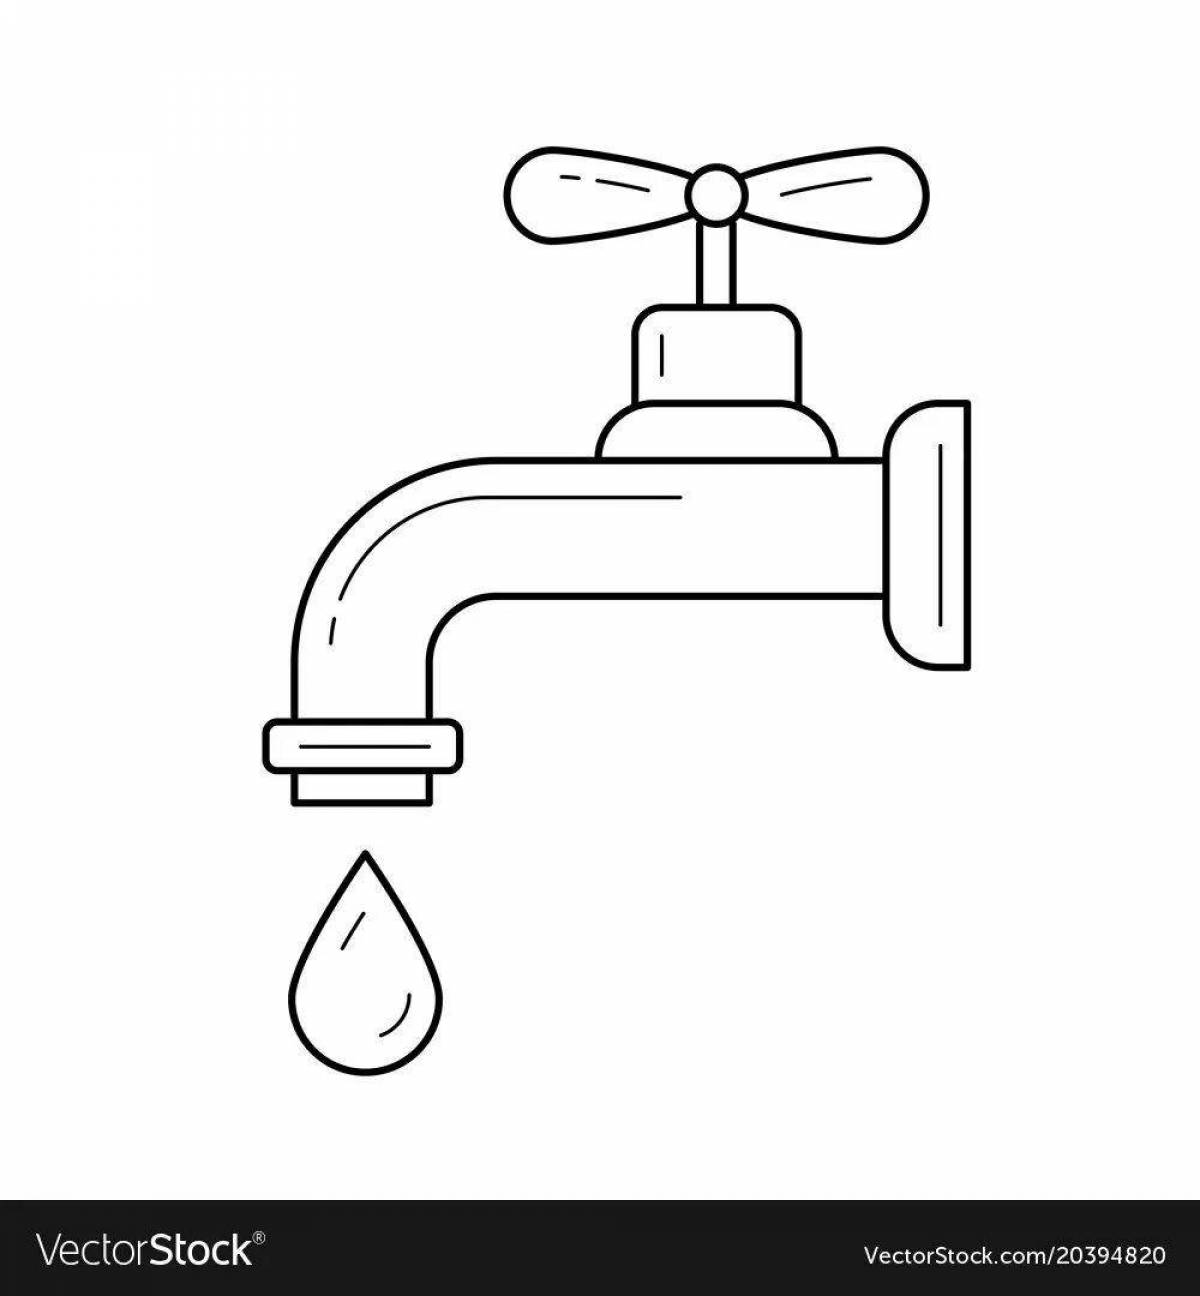 Water faucet #3